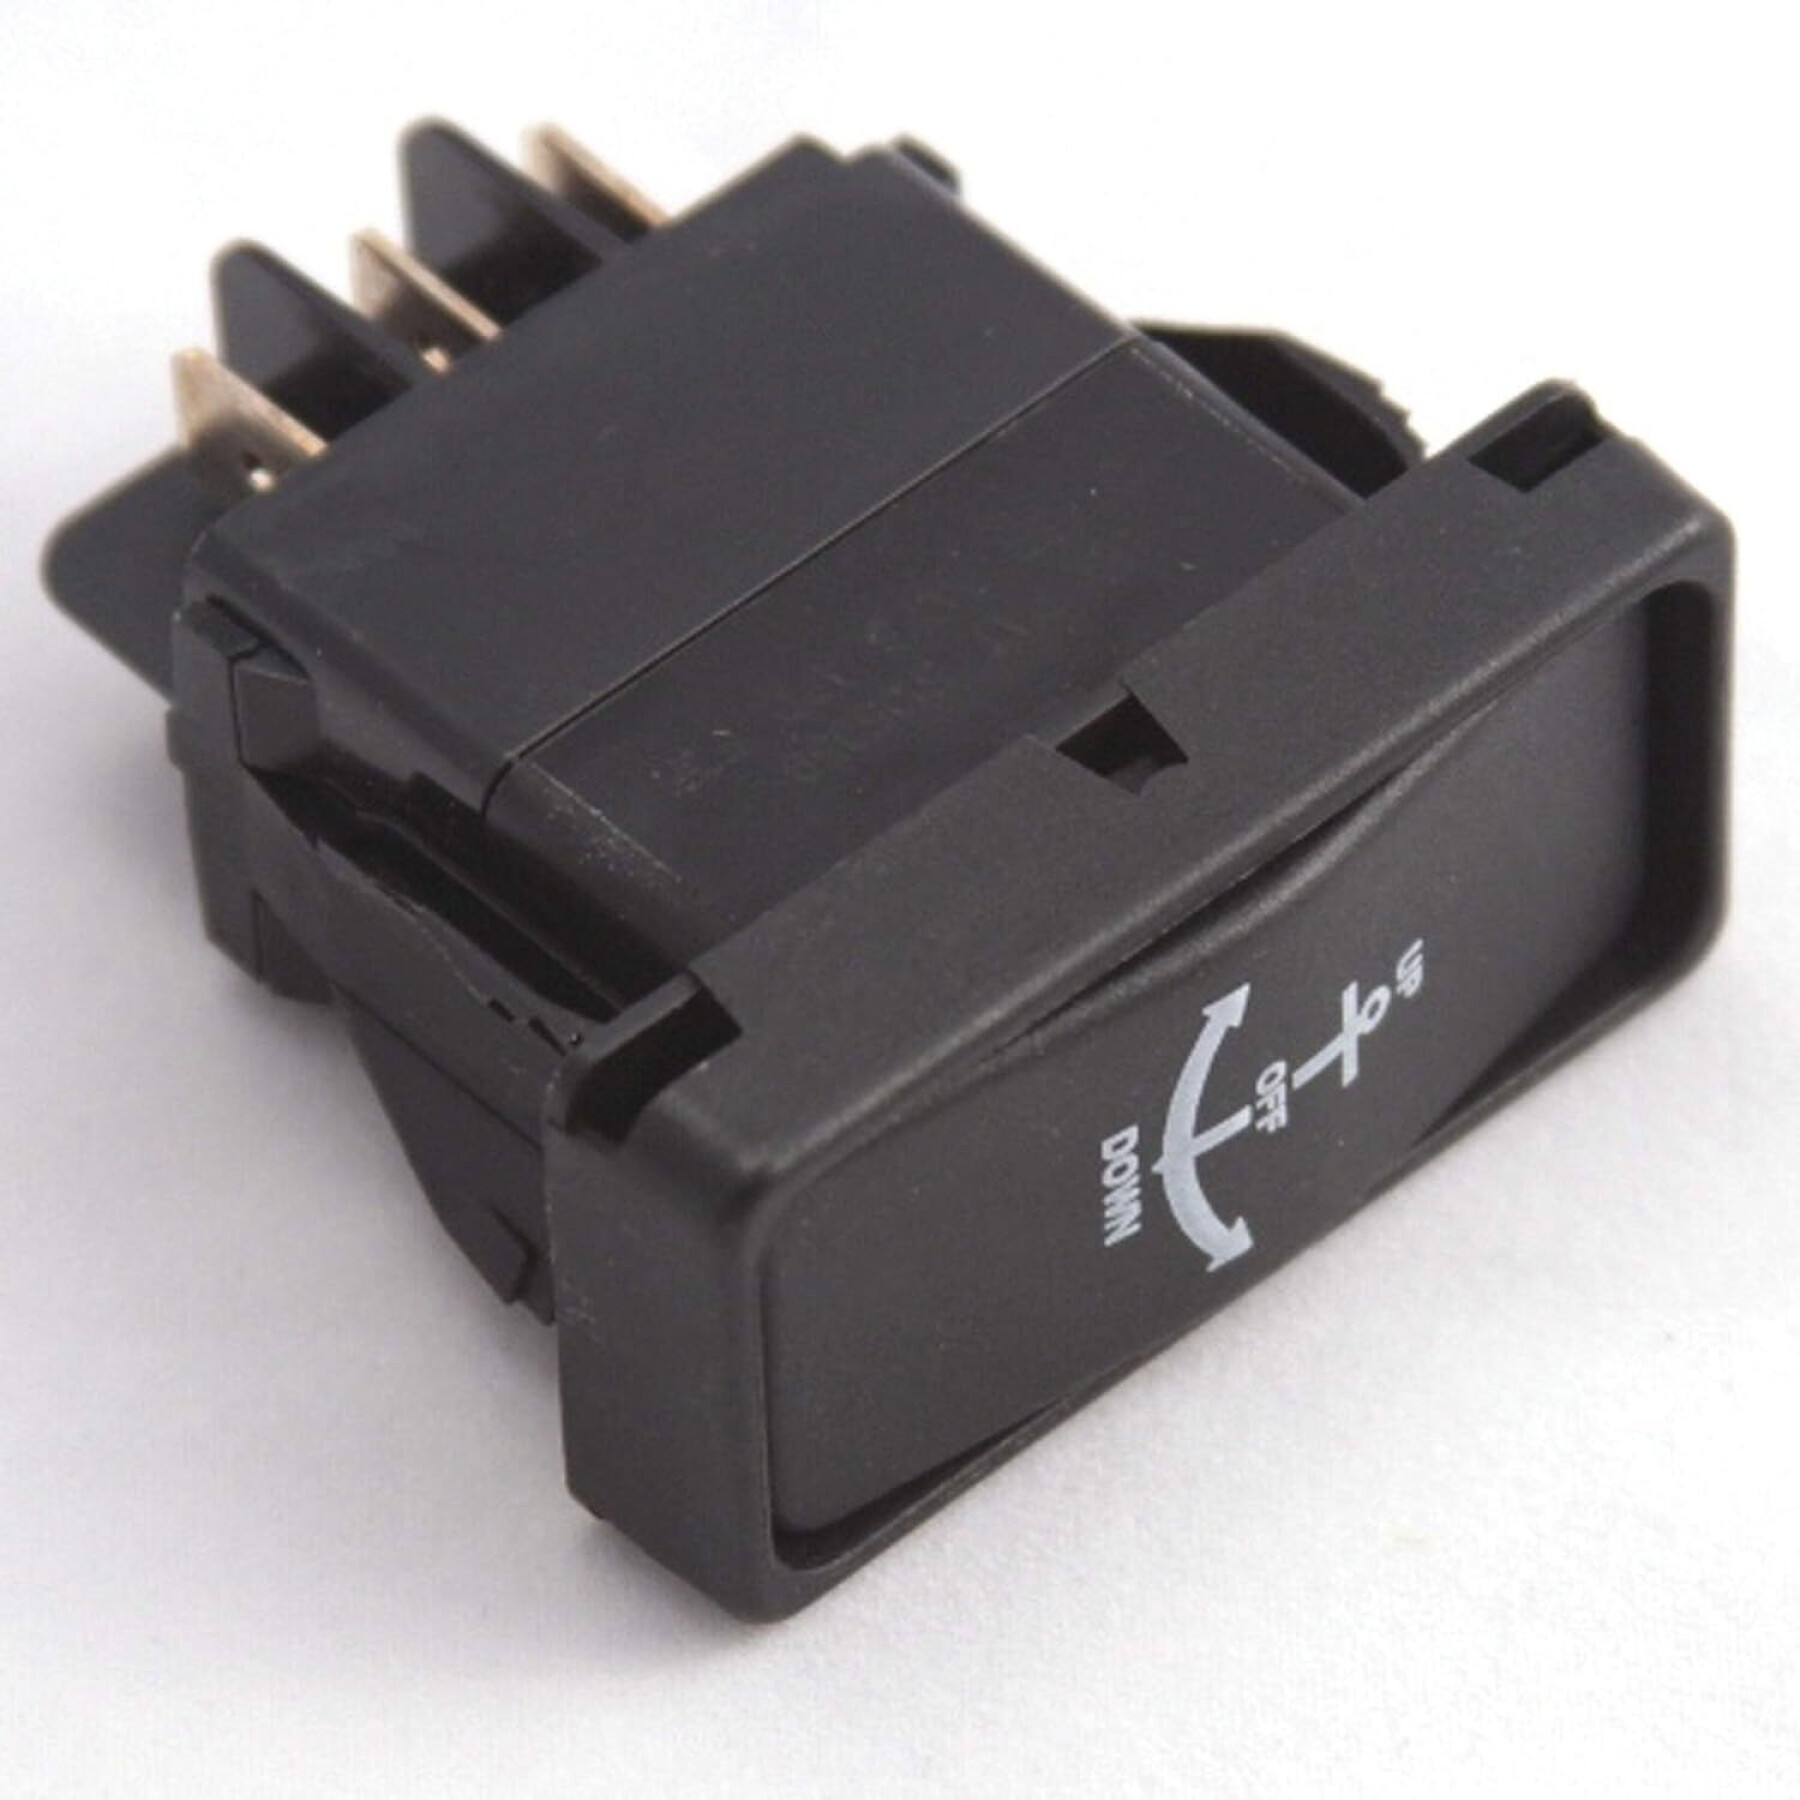 Cabezal cargador USB Minn Kota Dh40